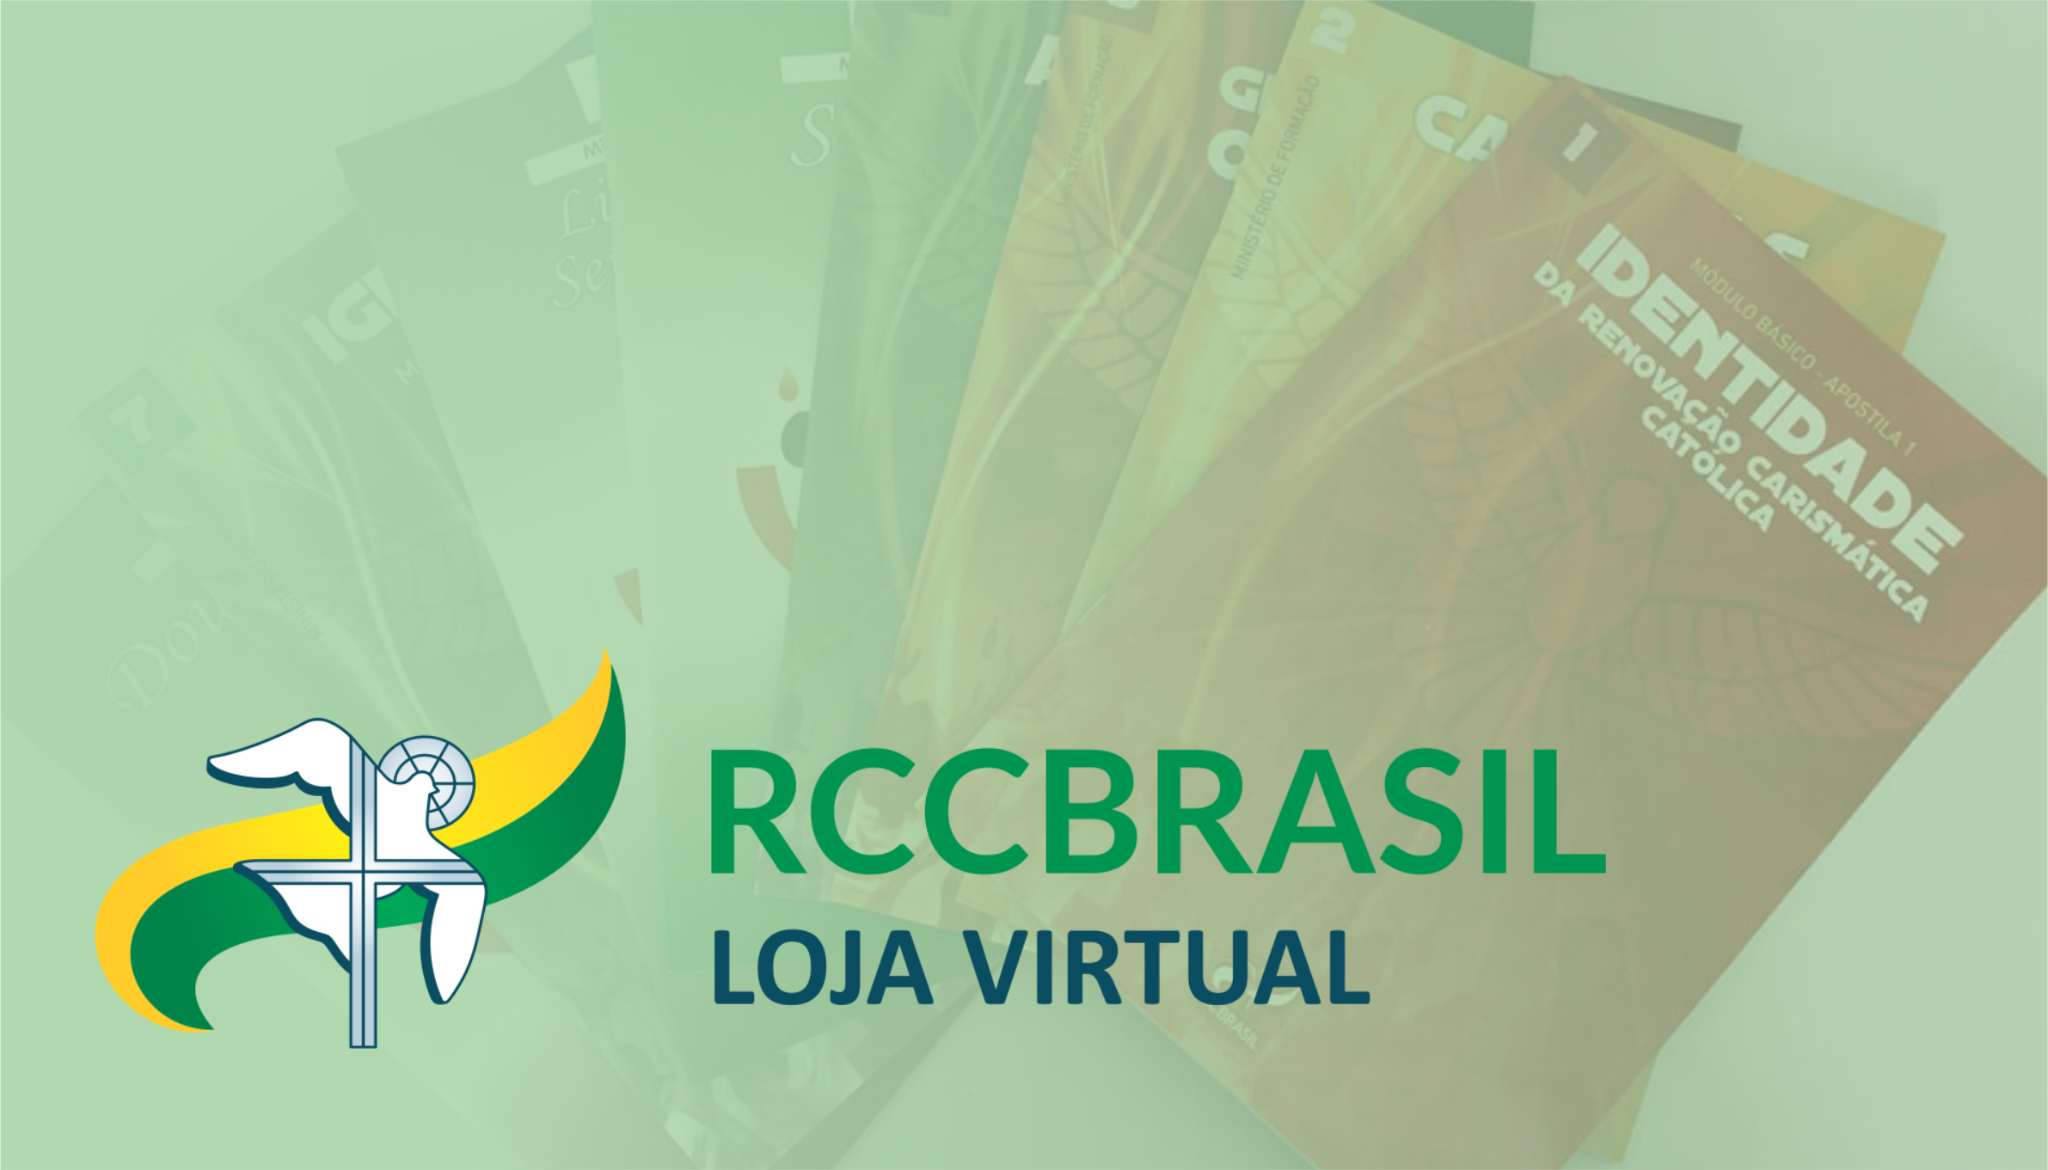 RCC BRASIL Loja Virtual